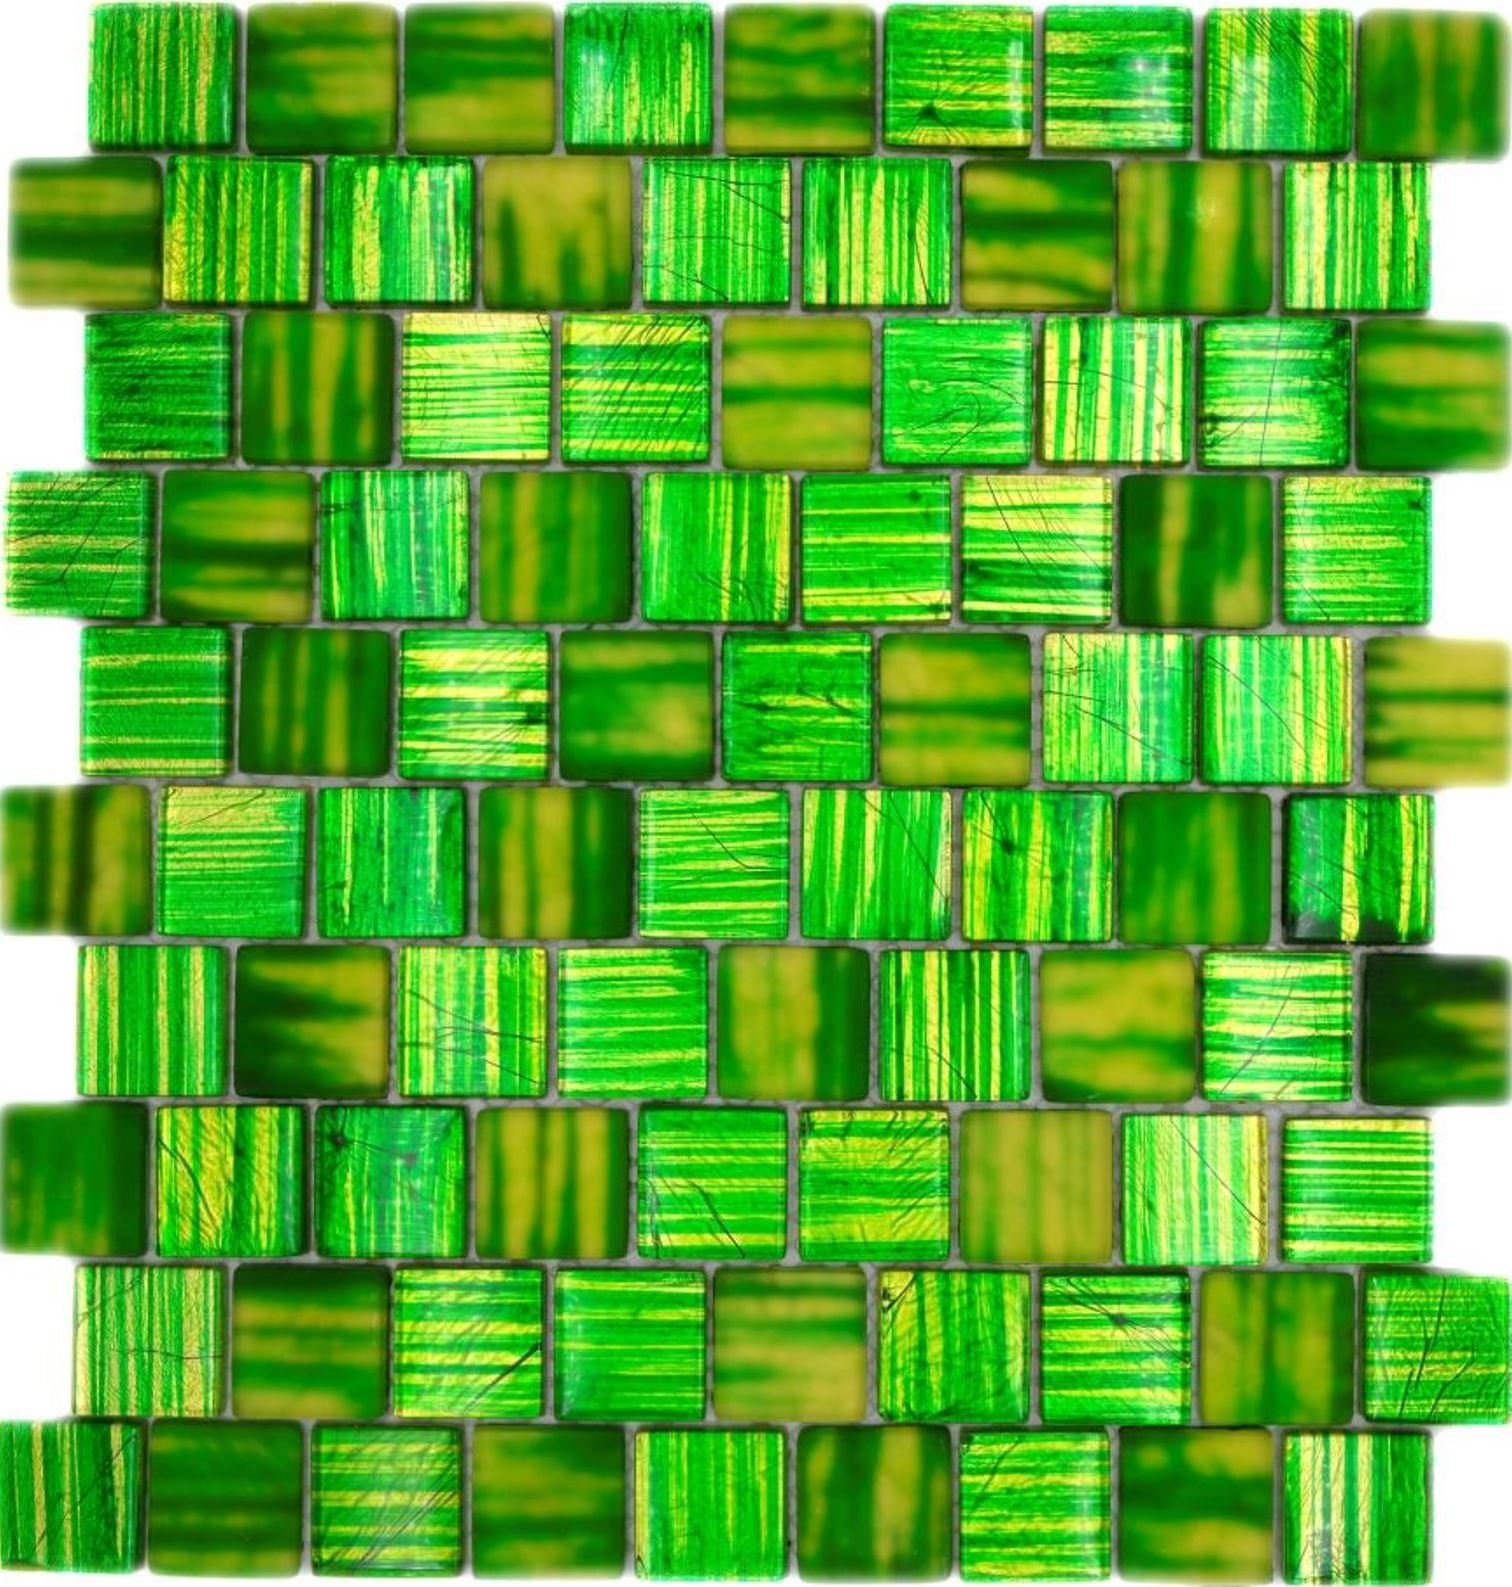 Mosani Mosaikfliesen Mosaik Milchglas Glasmosaik grün Transluzent matt Fliese Crystal klar